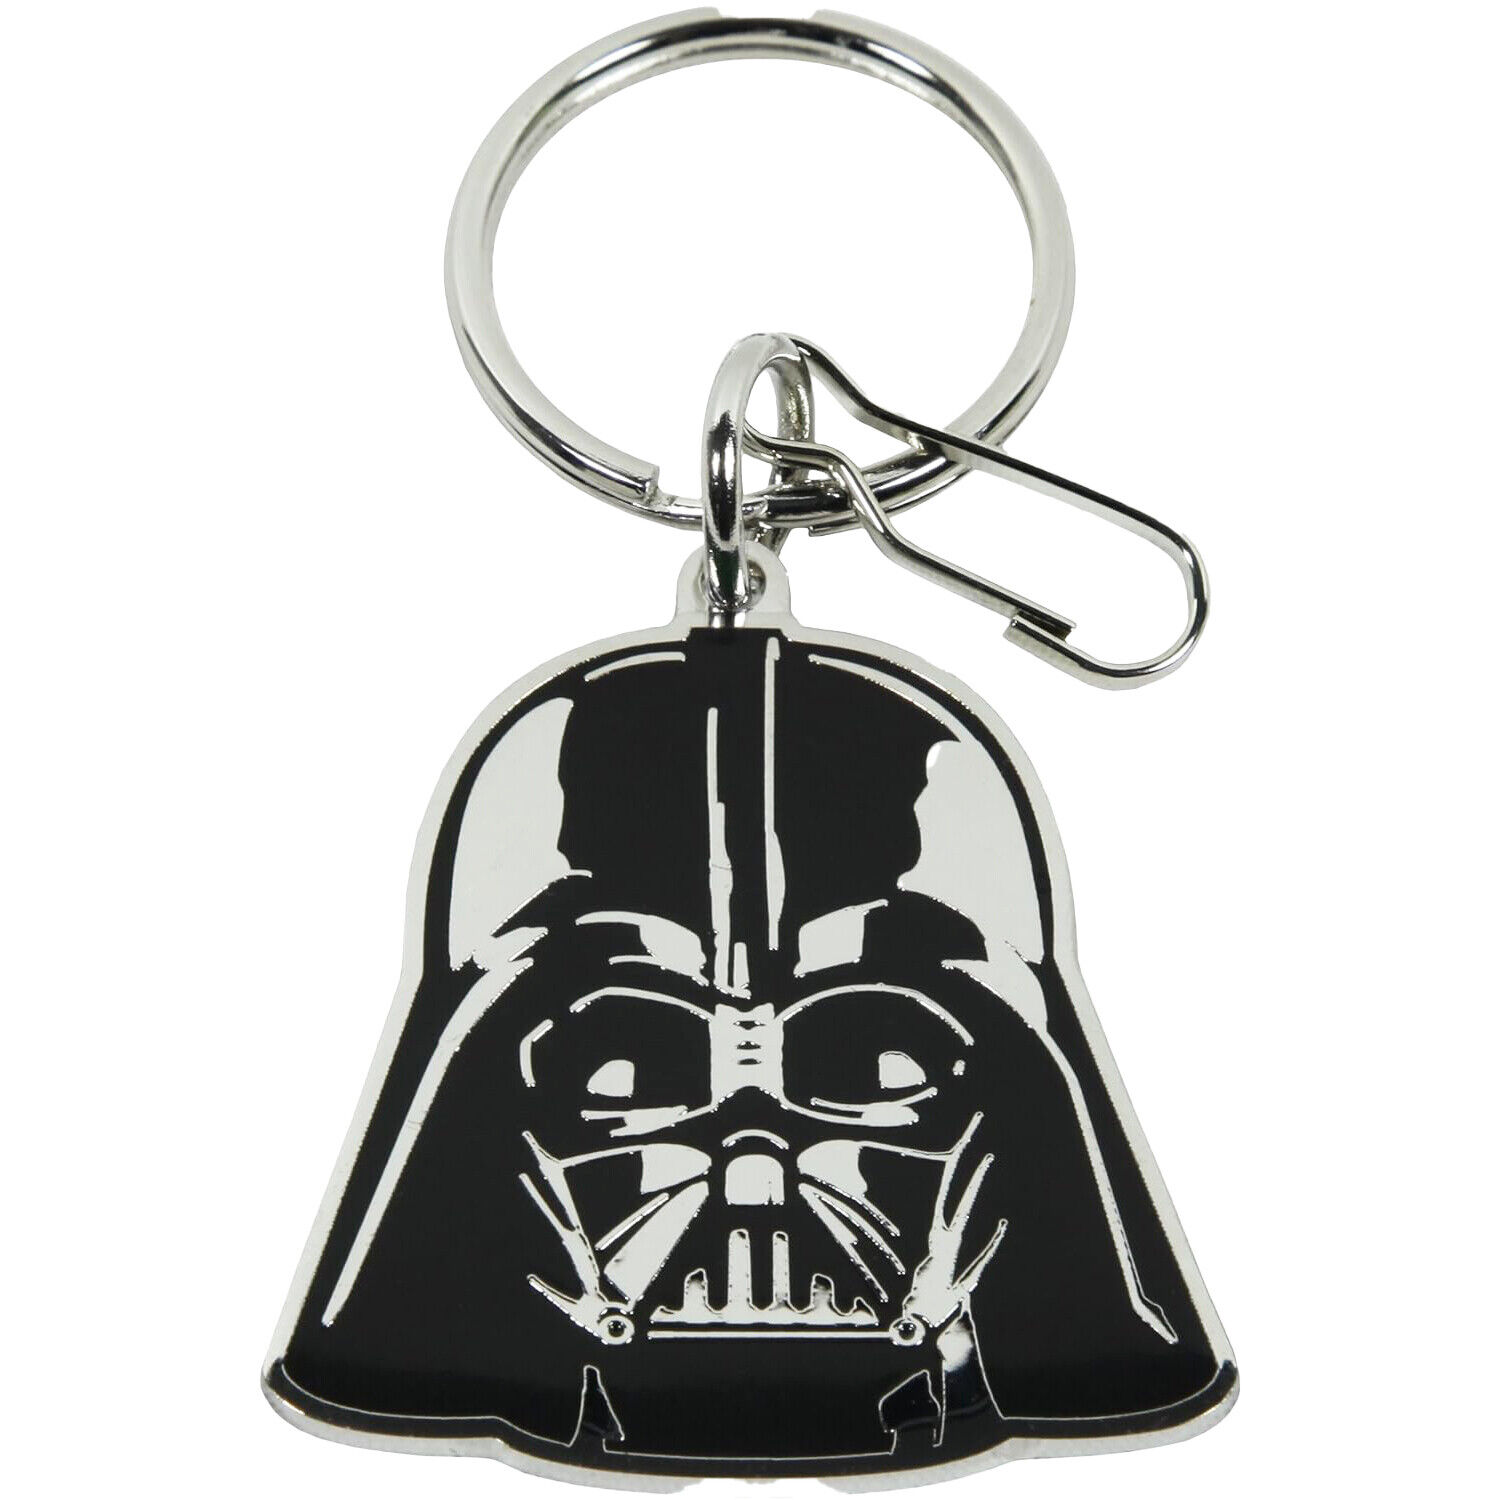 Plasticolor Star Wars Keychain - Darth Vader Design in Sleek Black